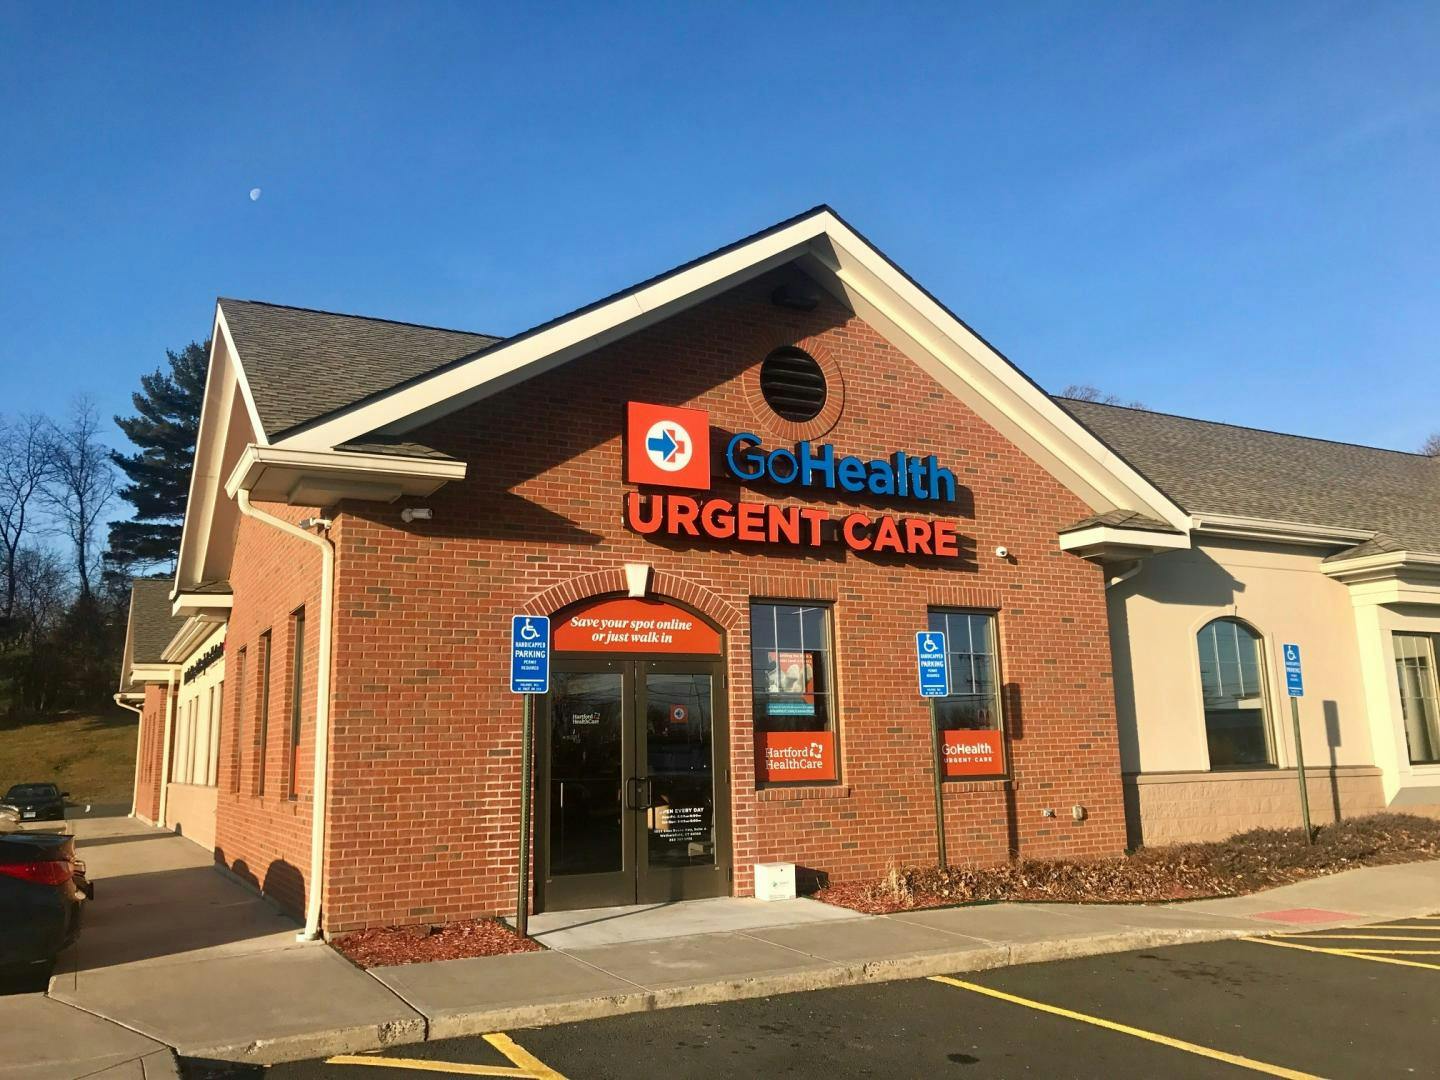 Urgent Care in Wethersfield Hartford Healthcare - GoHealth Urgent